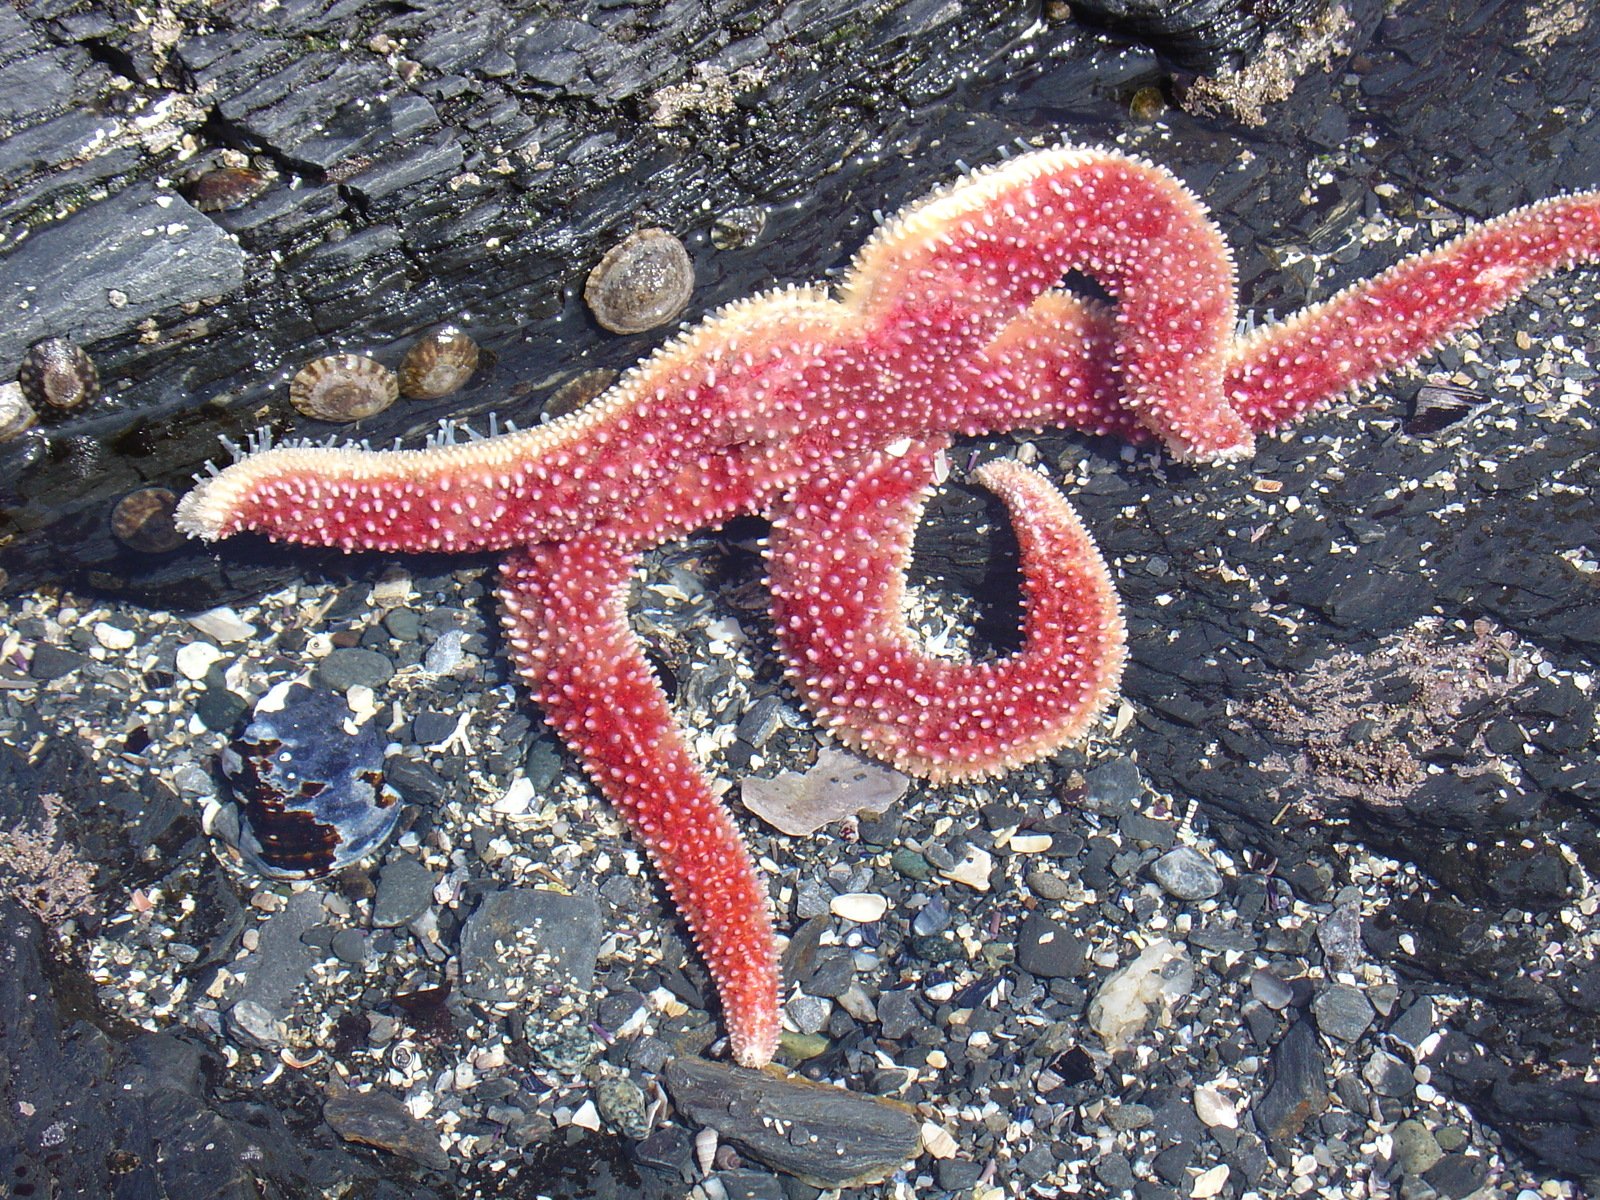 an ocean starfish lays upside down on the rocks